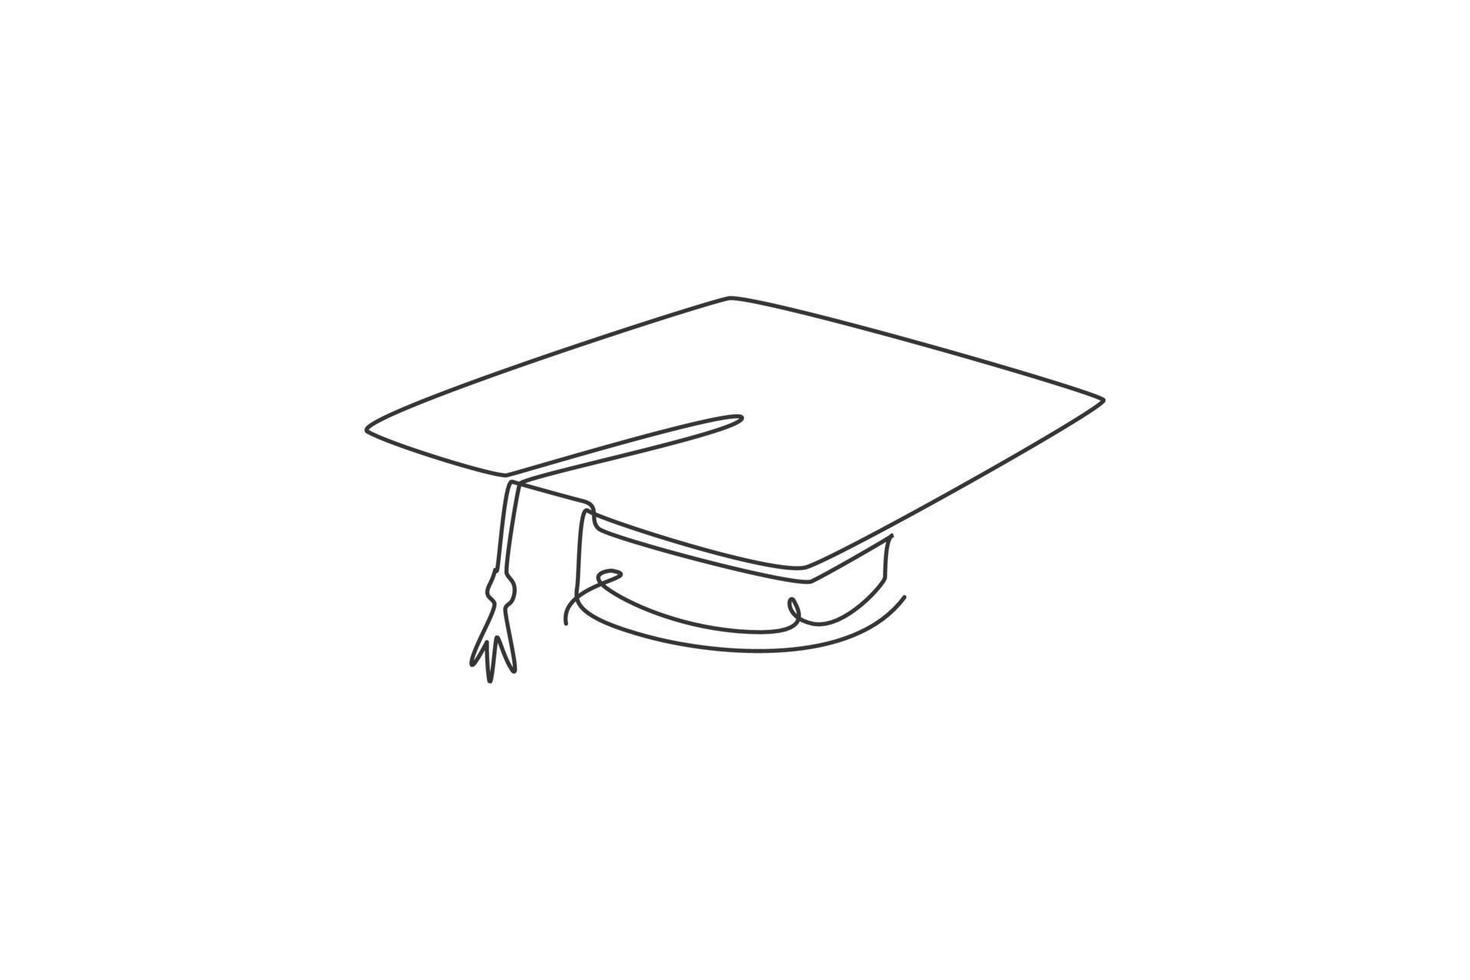 One continuous line drawing of graduation cap for graduating ceremony equipment logo icon. University grad uniform logotype symbol template concept. Trendy single line draw design vector illustration